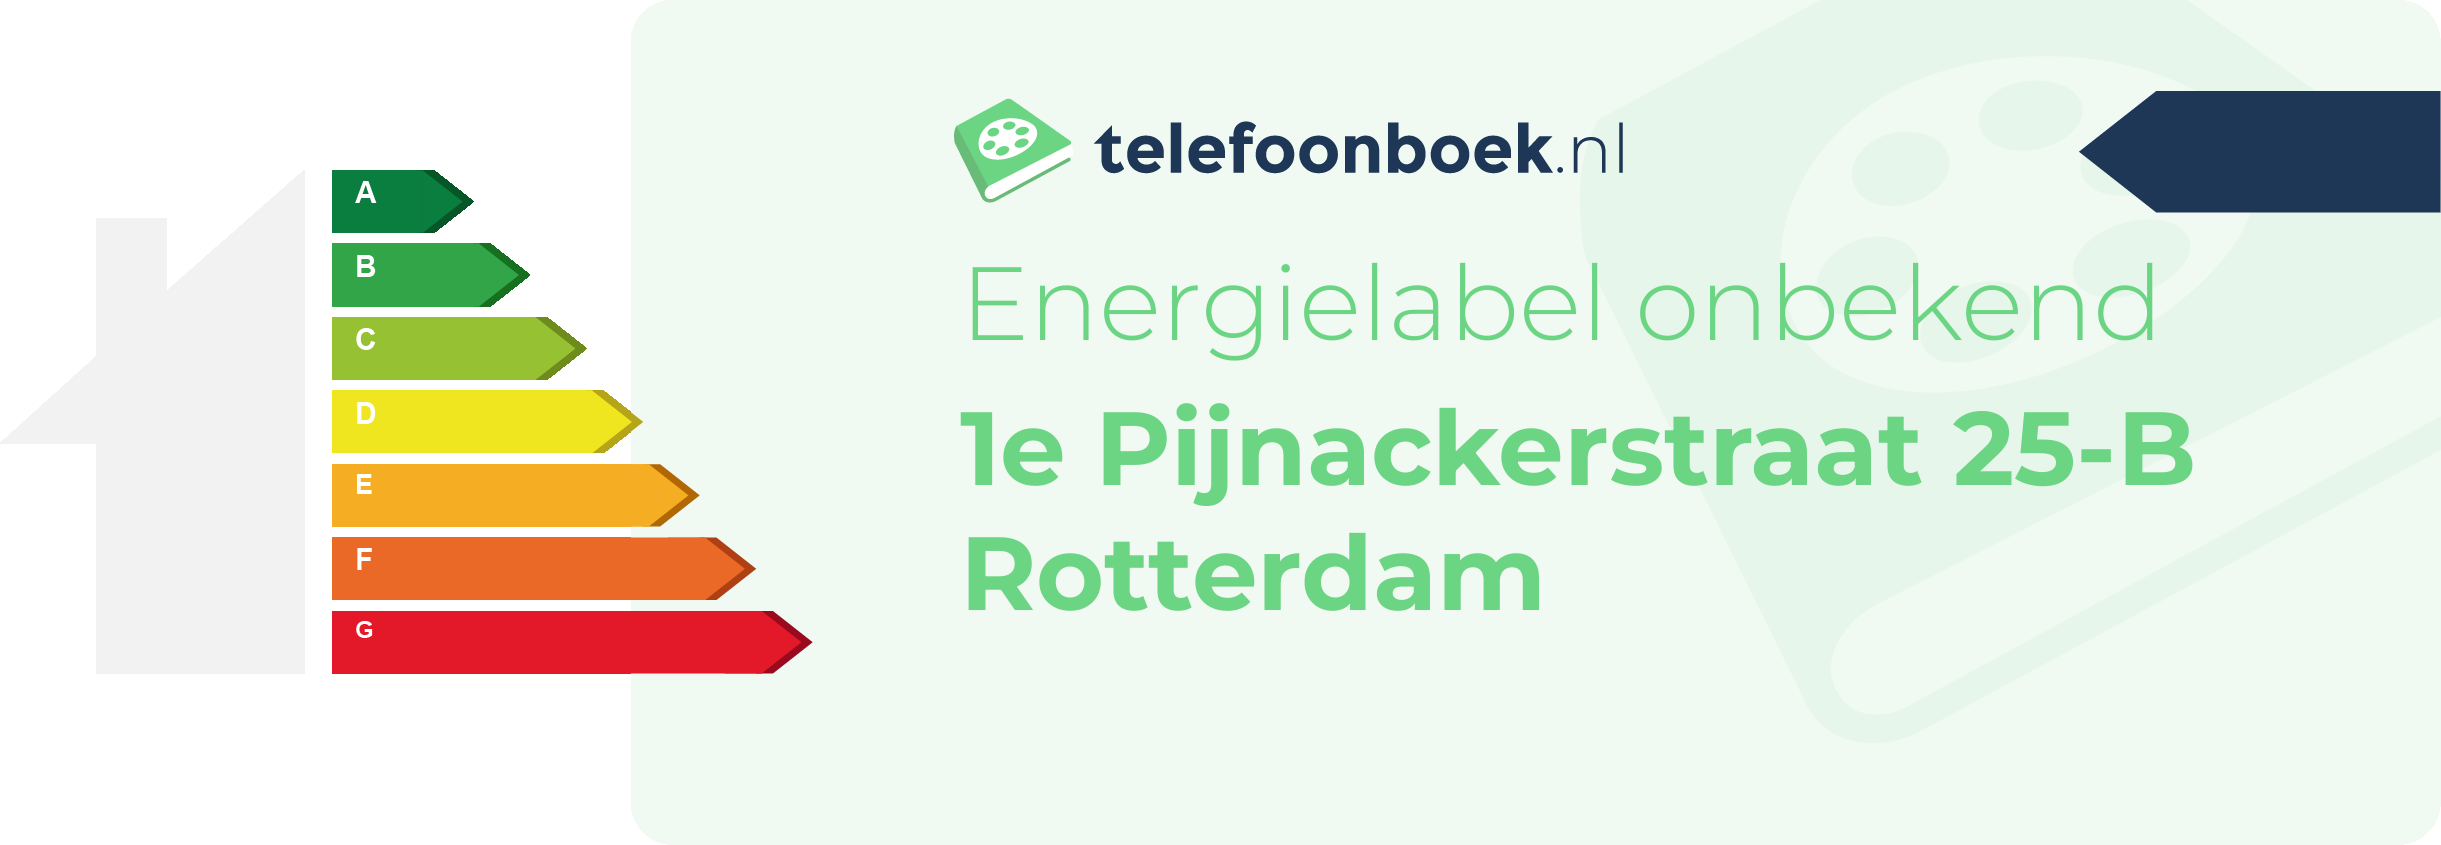 Energielabel 1e Pijnackerstraat 25-B Rotterdam